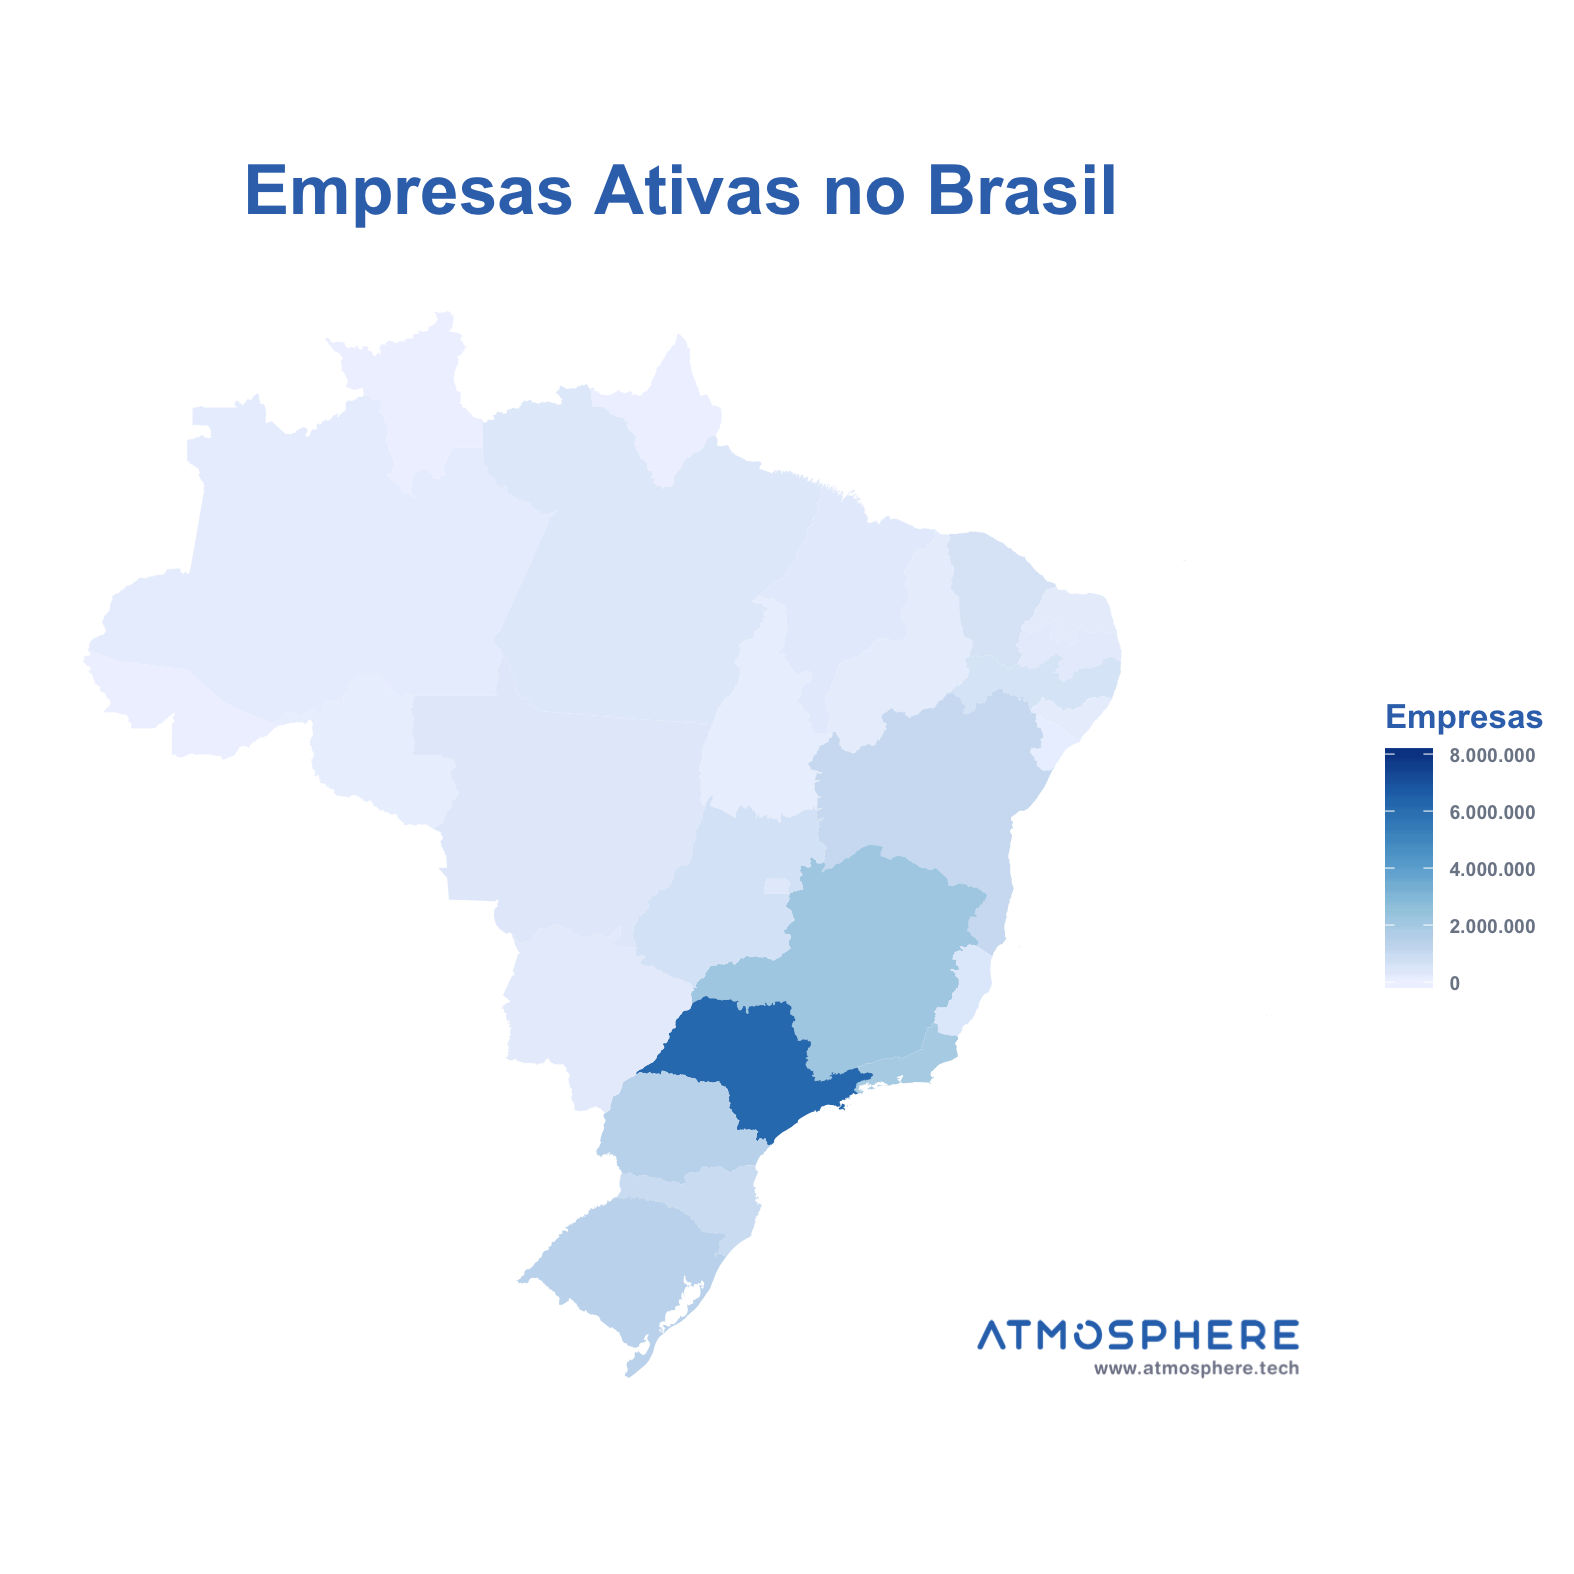 Oportunidados Empresas Ativas por Estado no Brasil